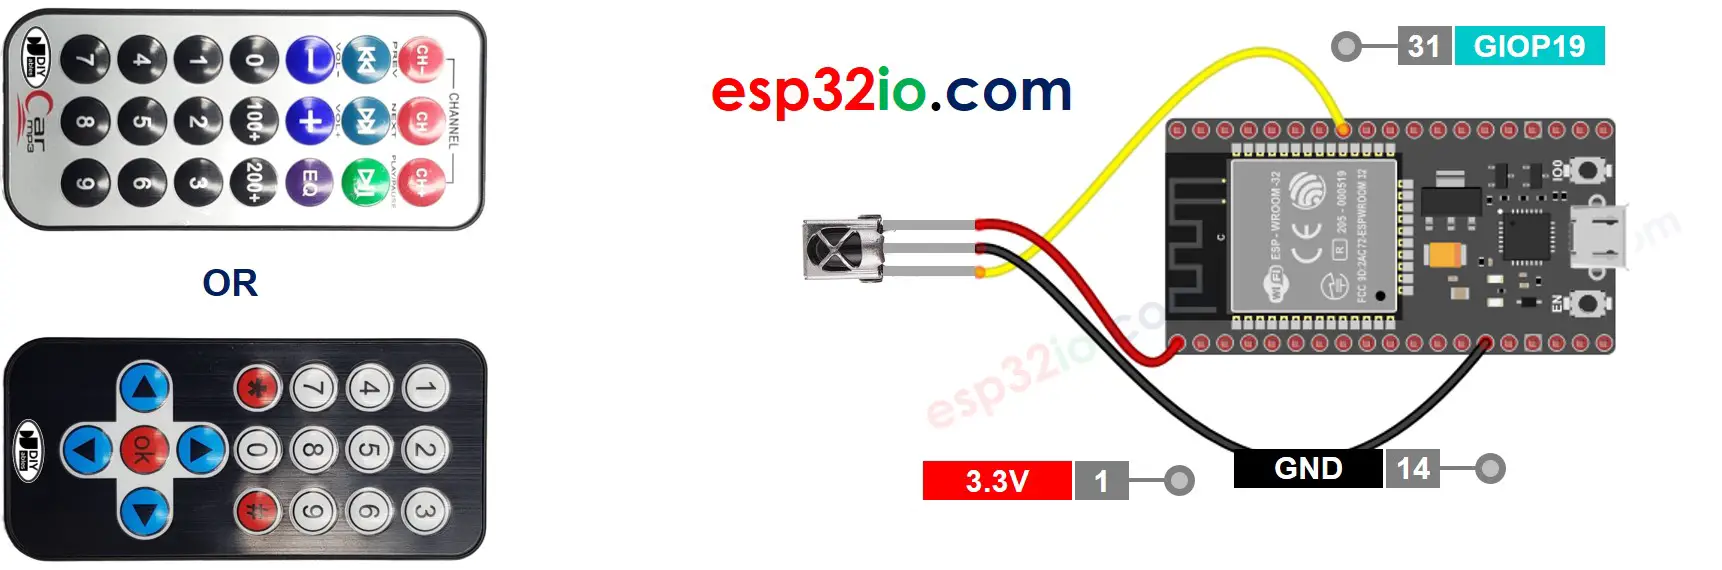 ESP32 IR Remote Control Wiring Diagram